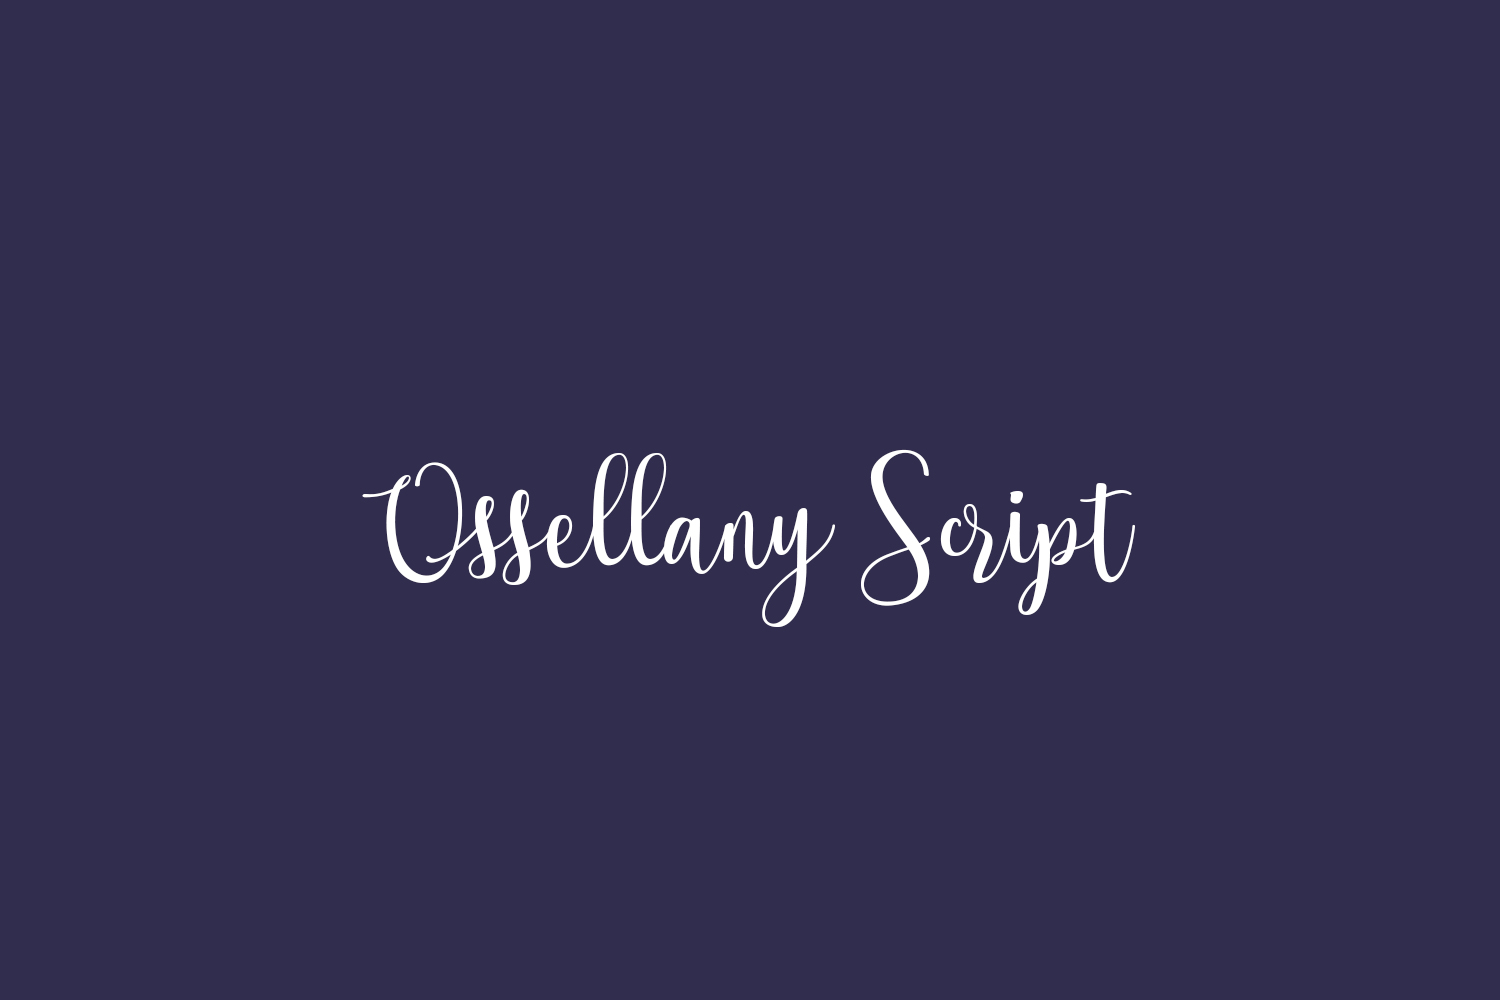 Ossellany Script Free Font